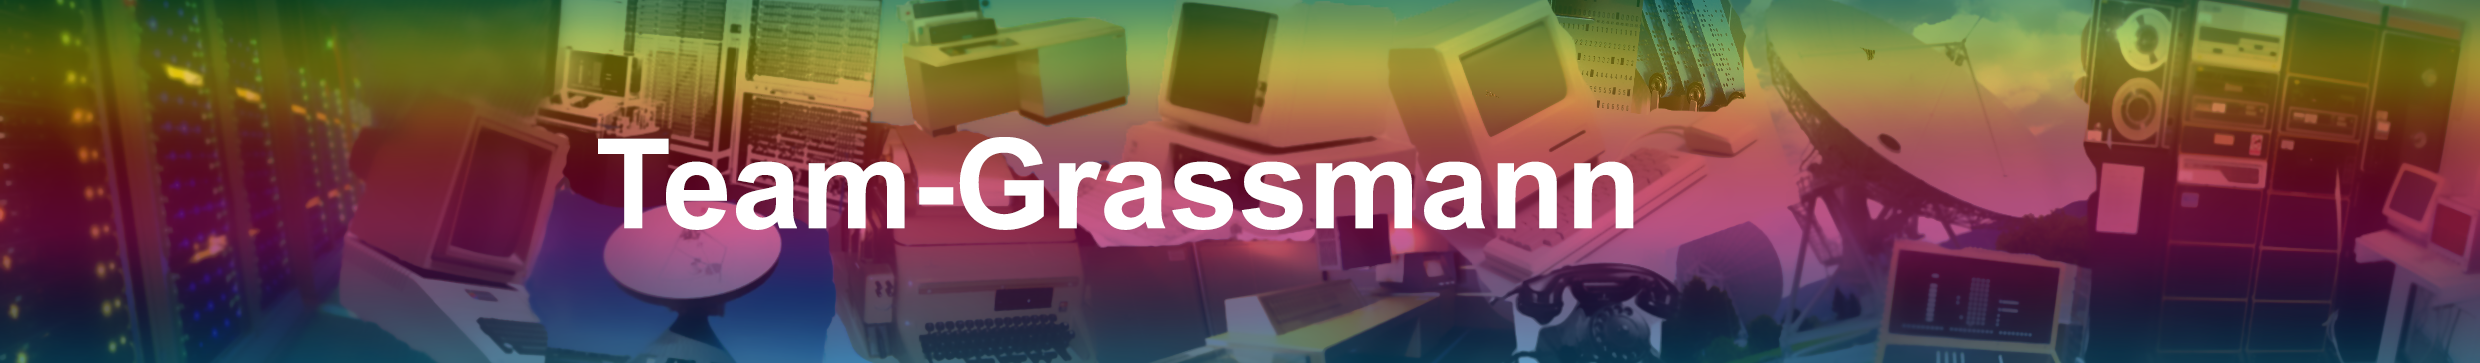 Team-Grassmann Homepage